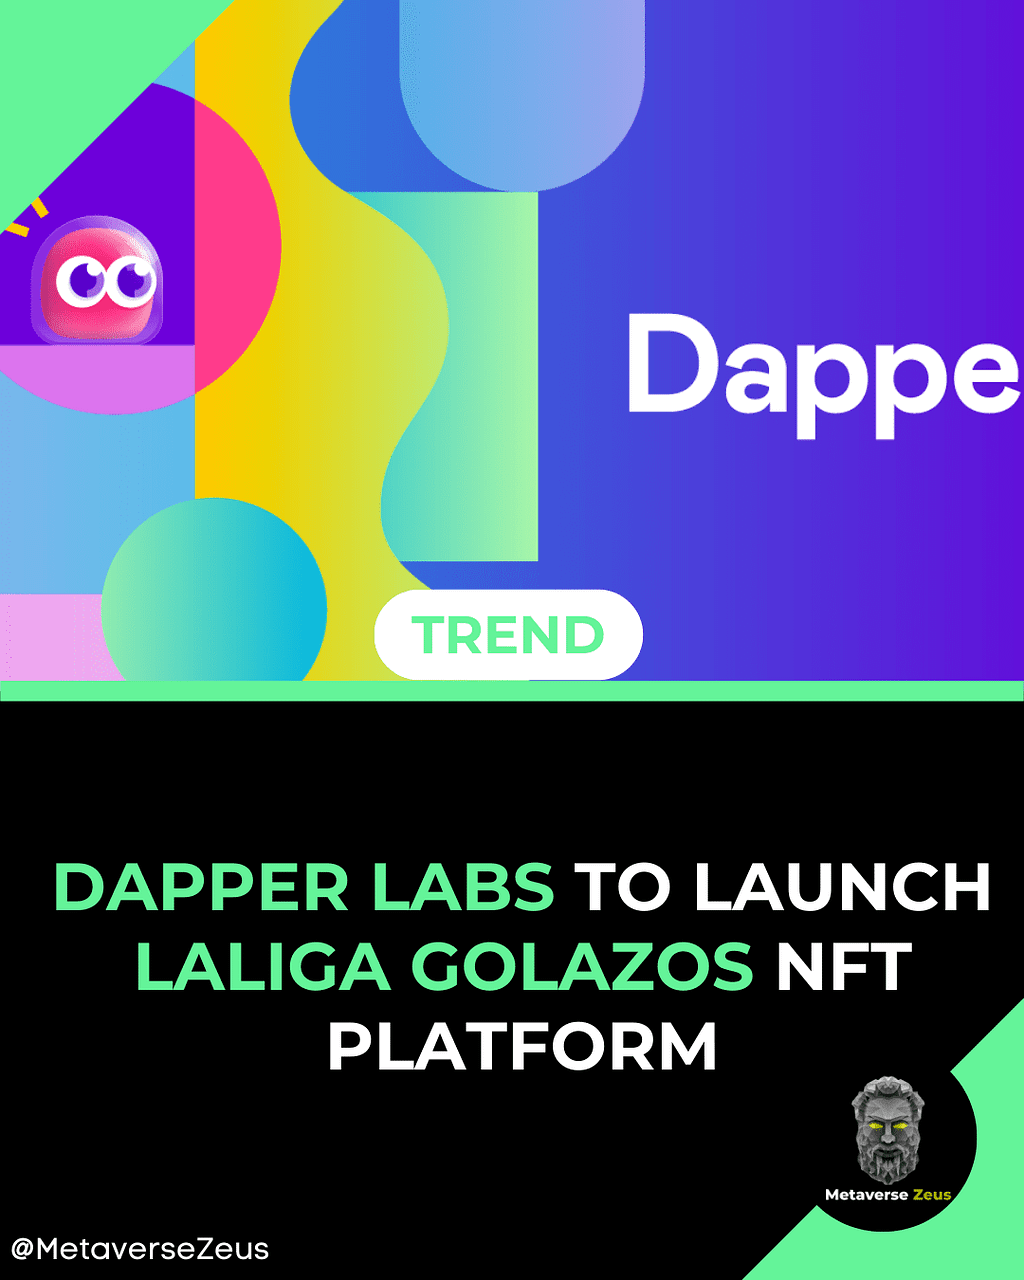 Dapper Labs to Launch LaLiga Golazos NFT Platform.